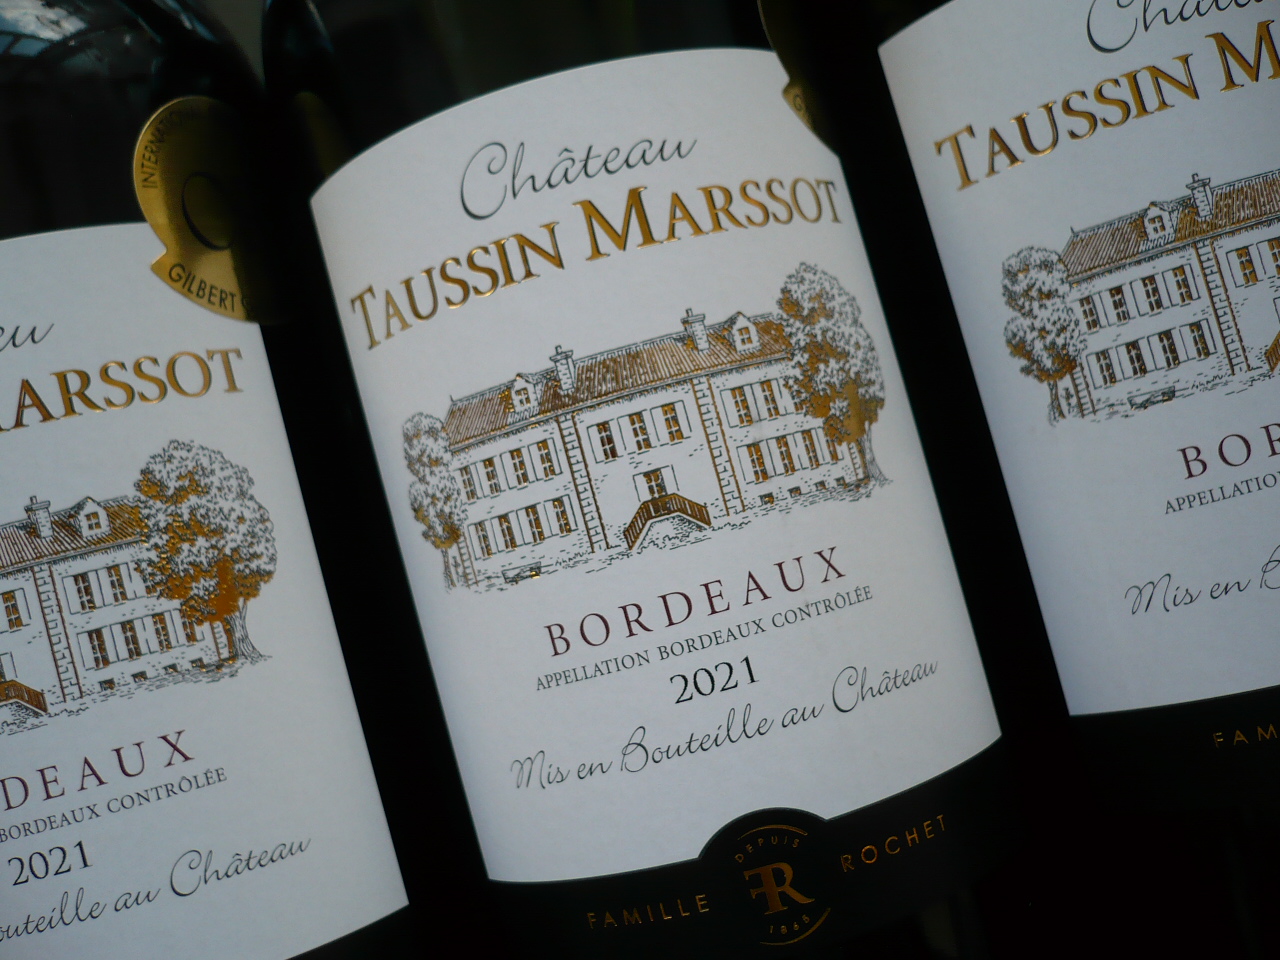 aop -0,75l- TAUSSIN 2021er – CHATEAU MARSSOT Fedelhören Rouge im Bordeaux Weinhandel